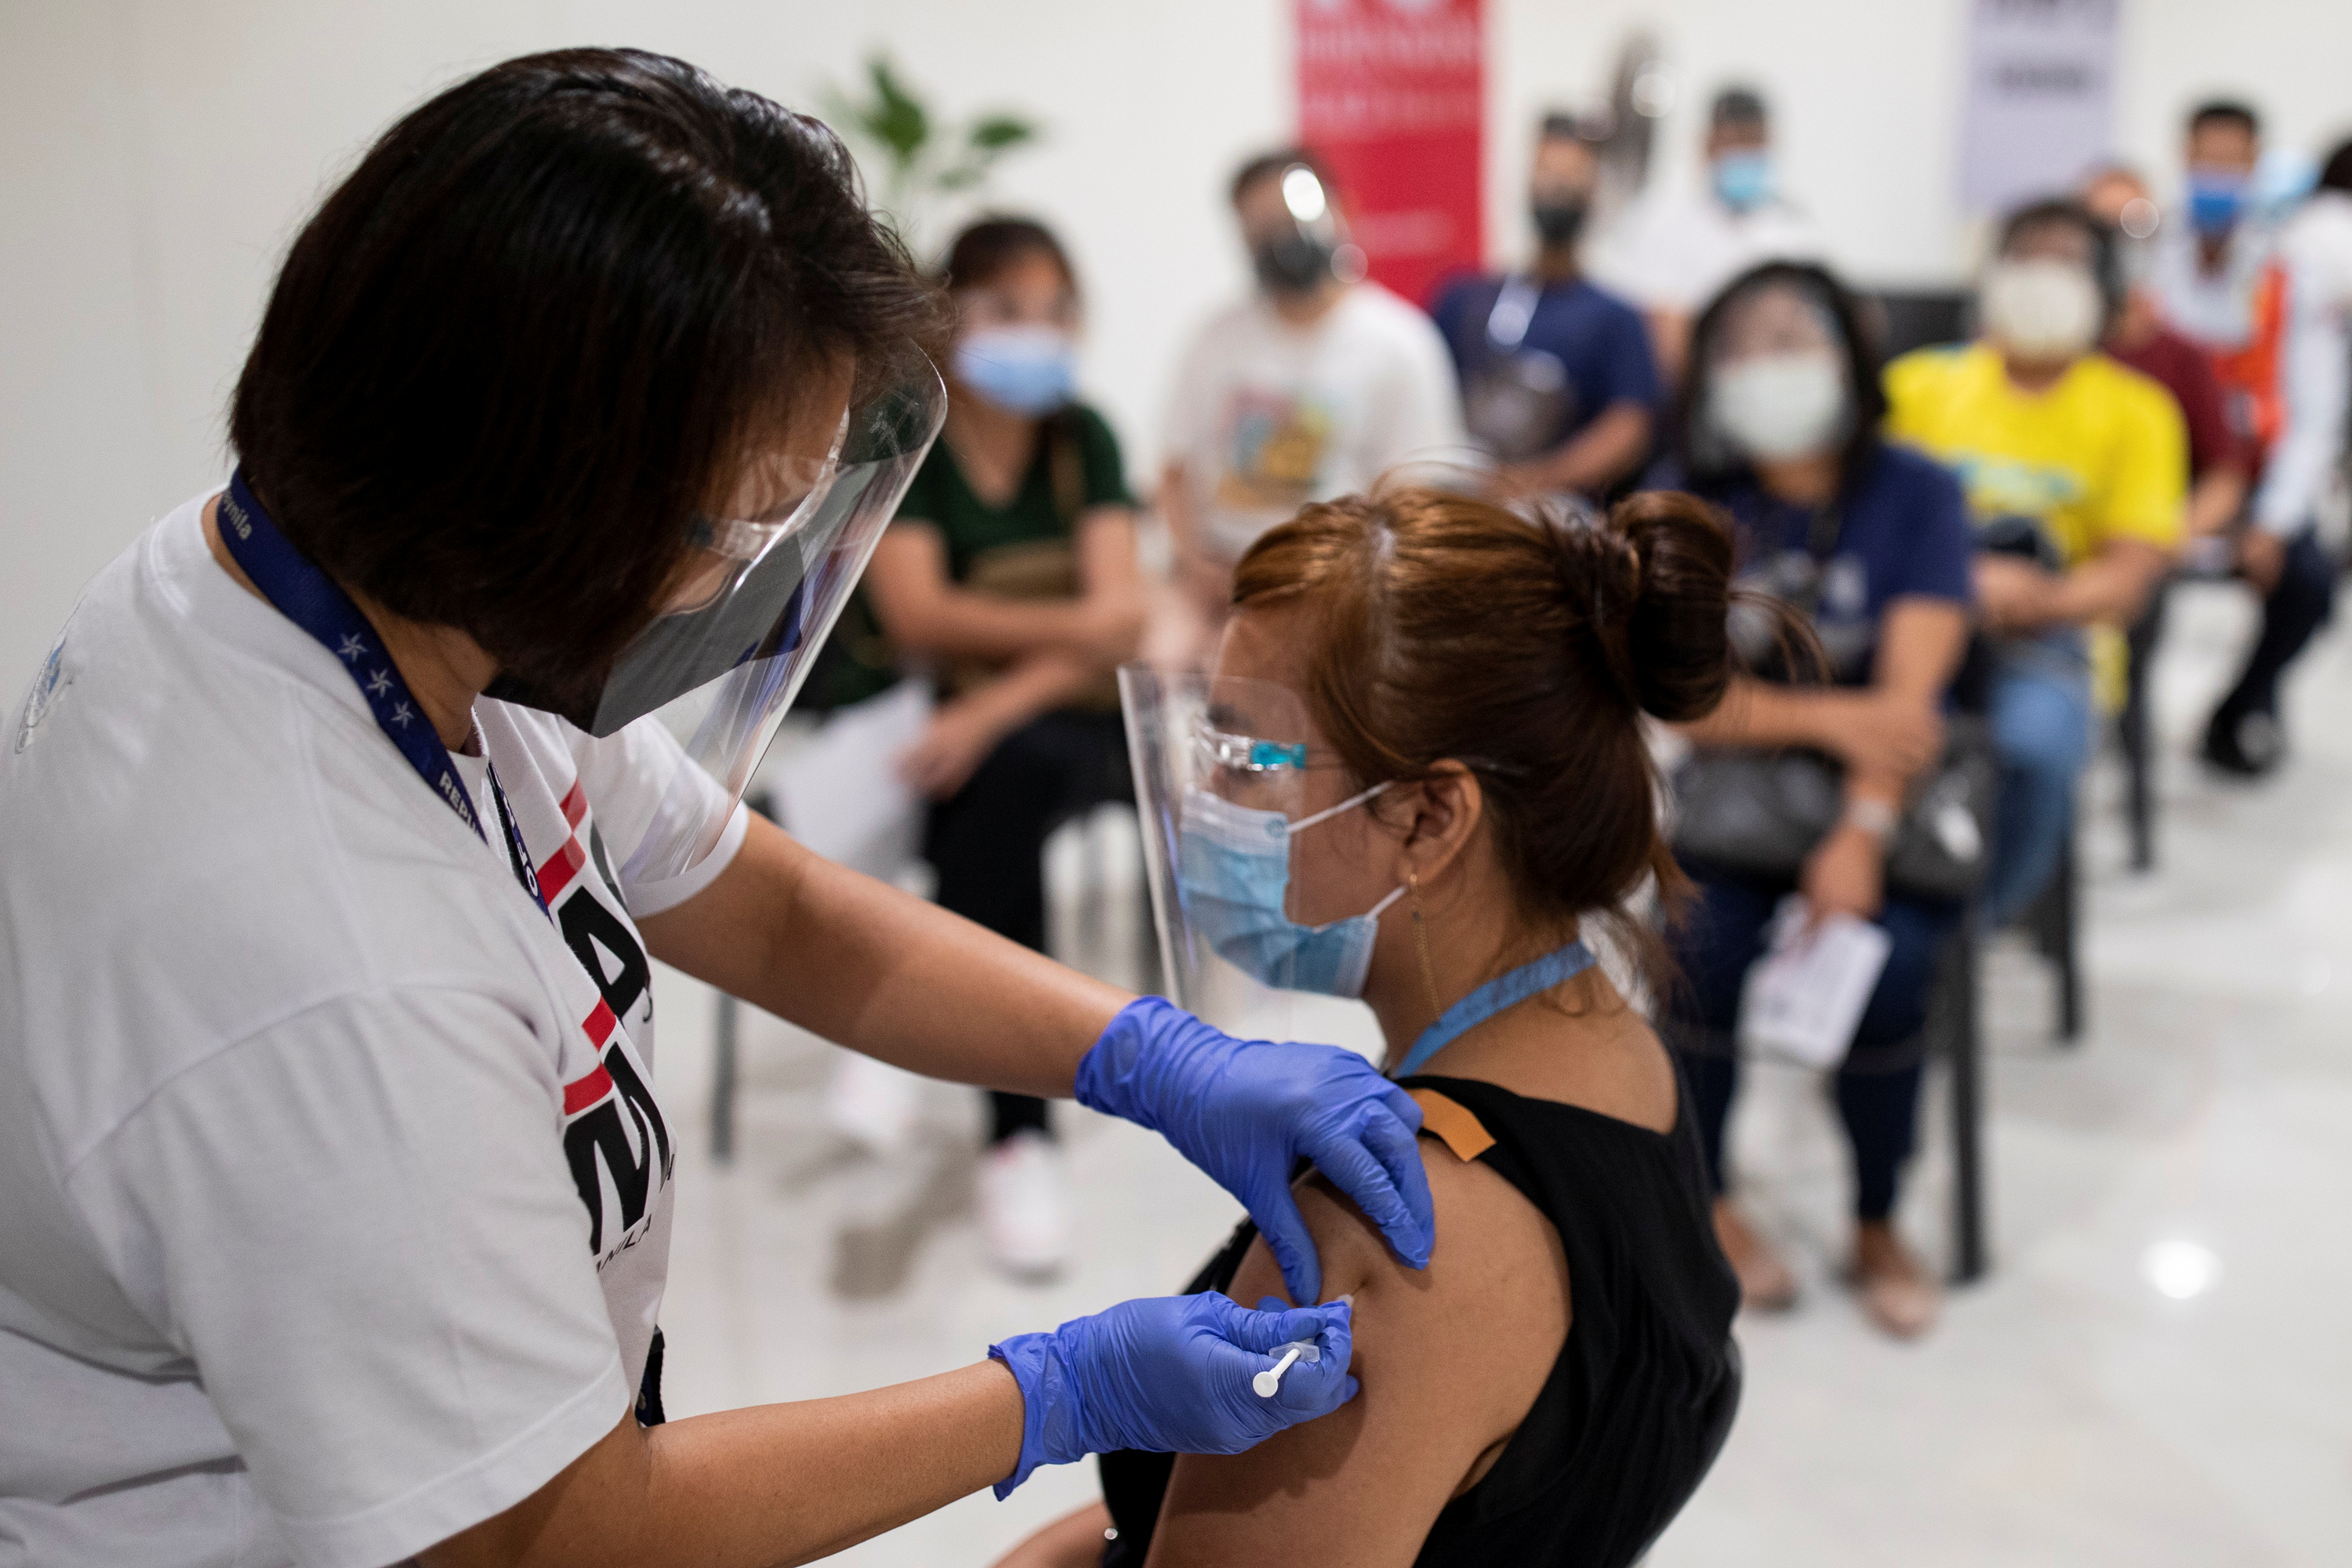 philippines travel vaccination